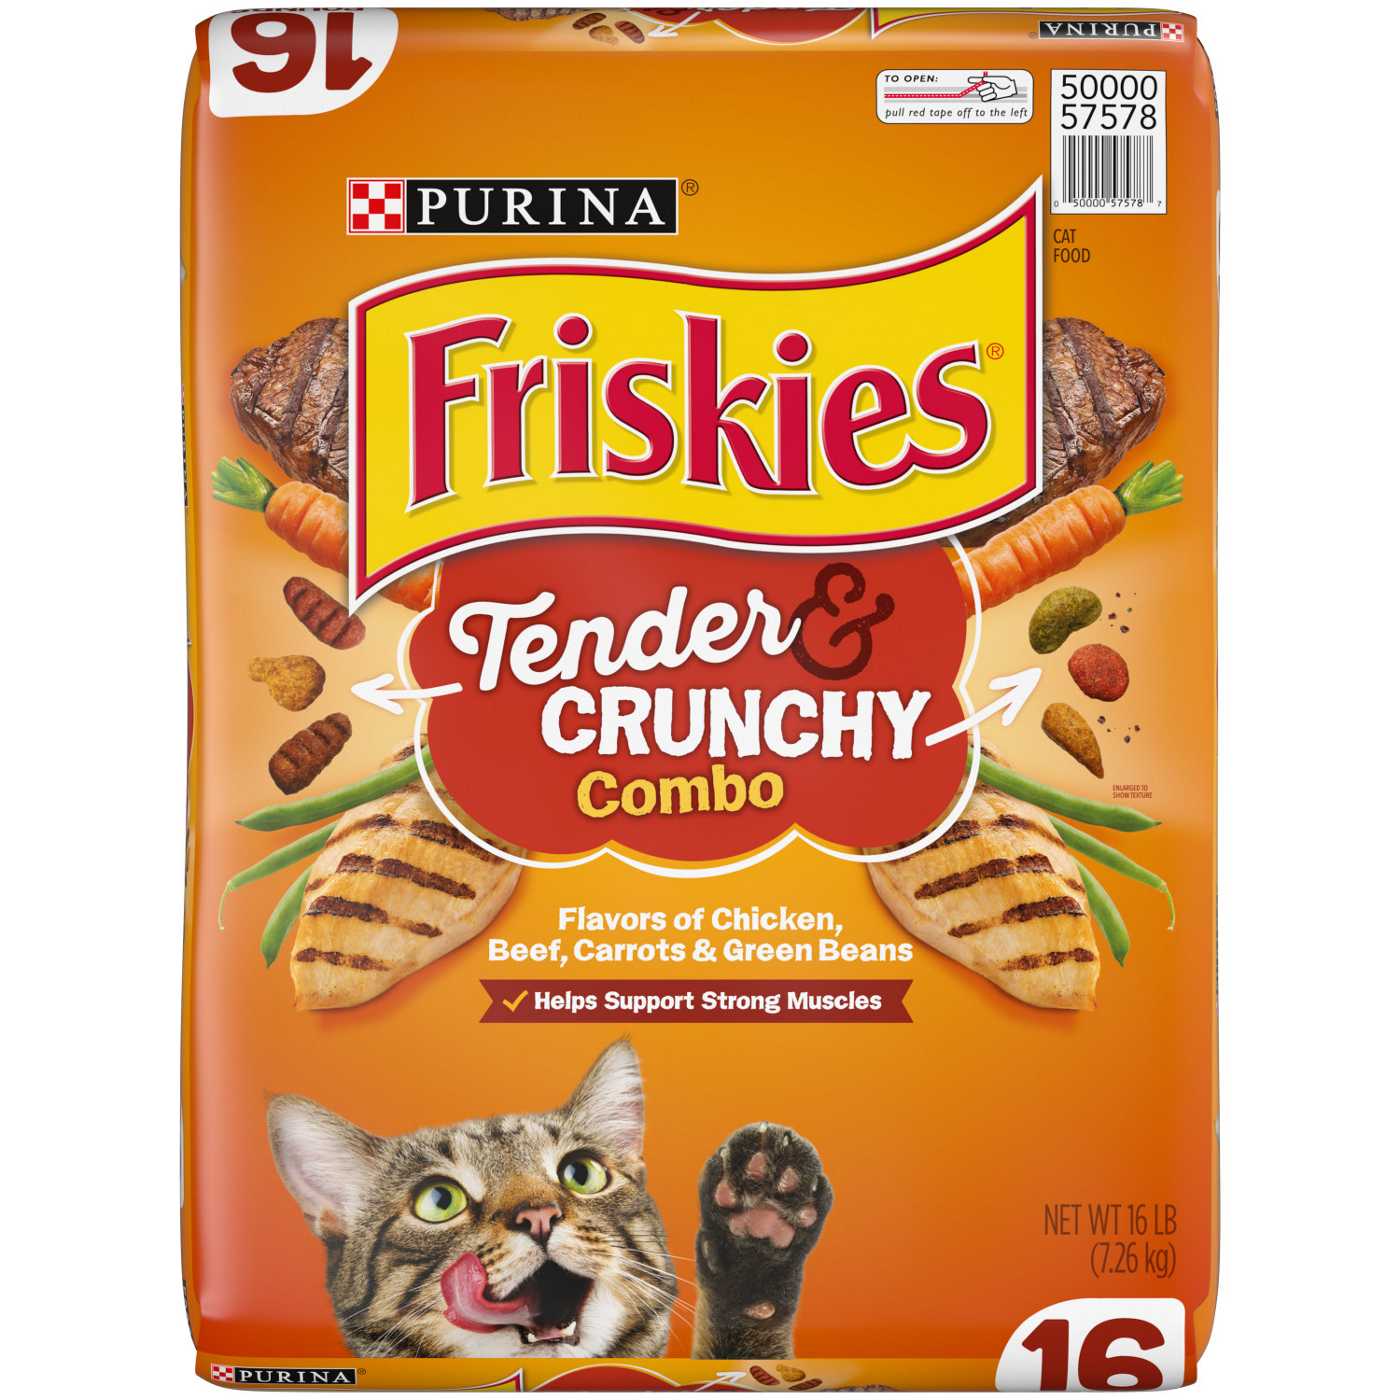 Friskies Purina Friskies Dry Cat Food, Tender & Crunchy Combo; image 1 of 10